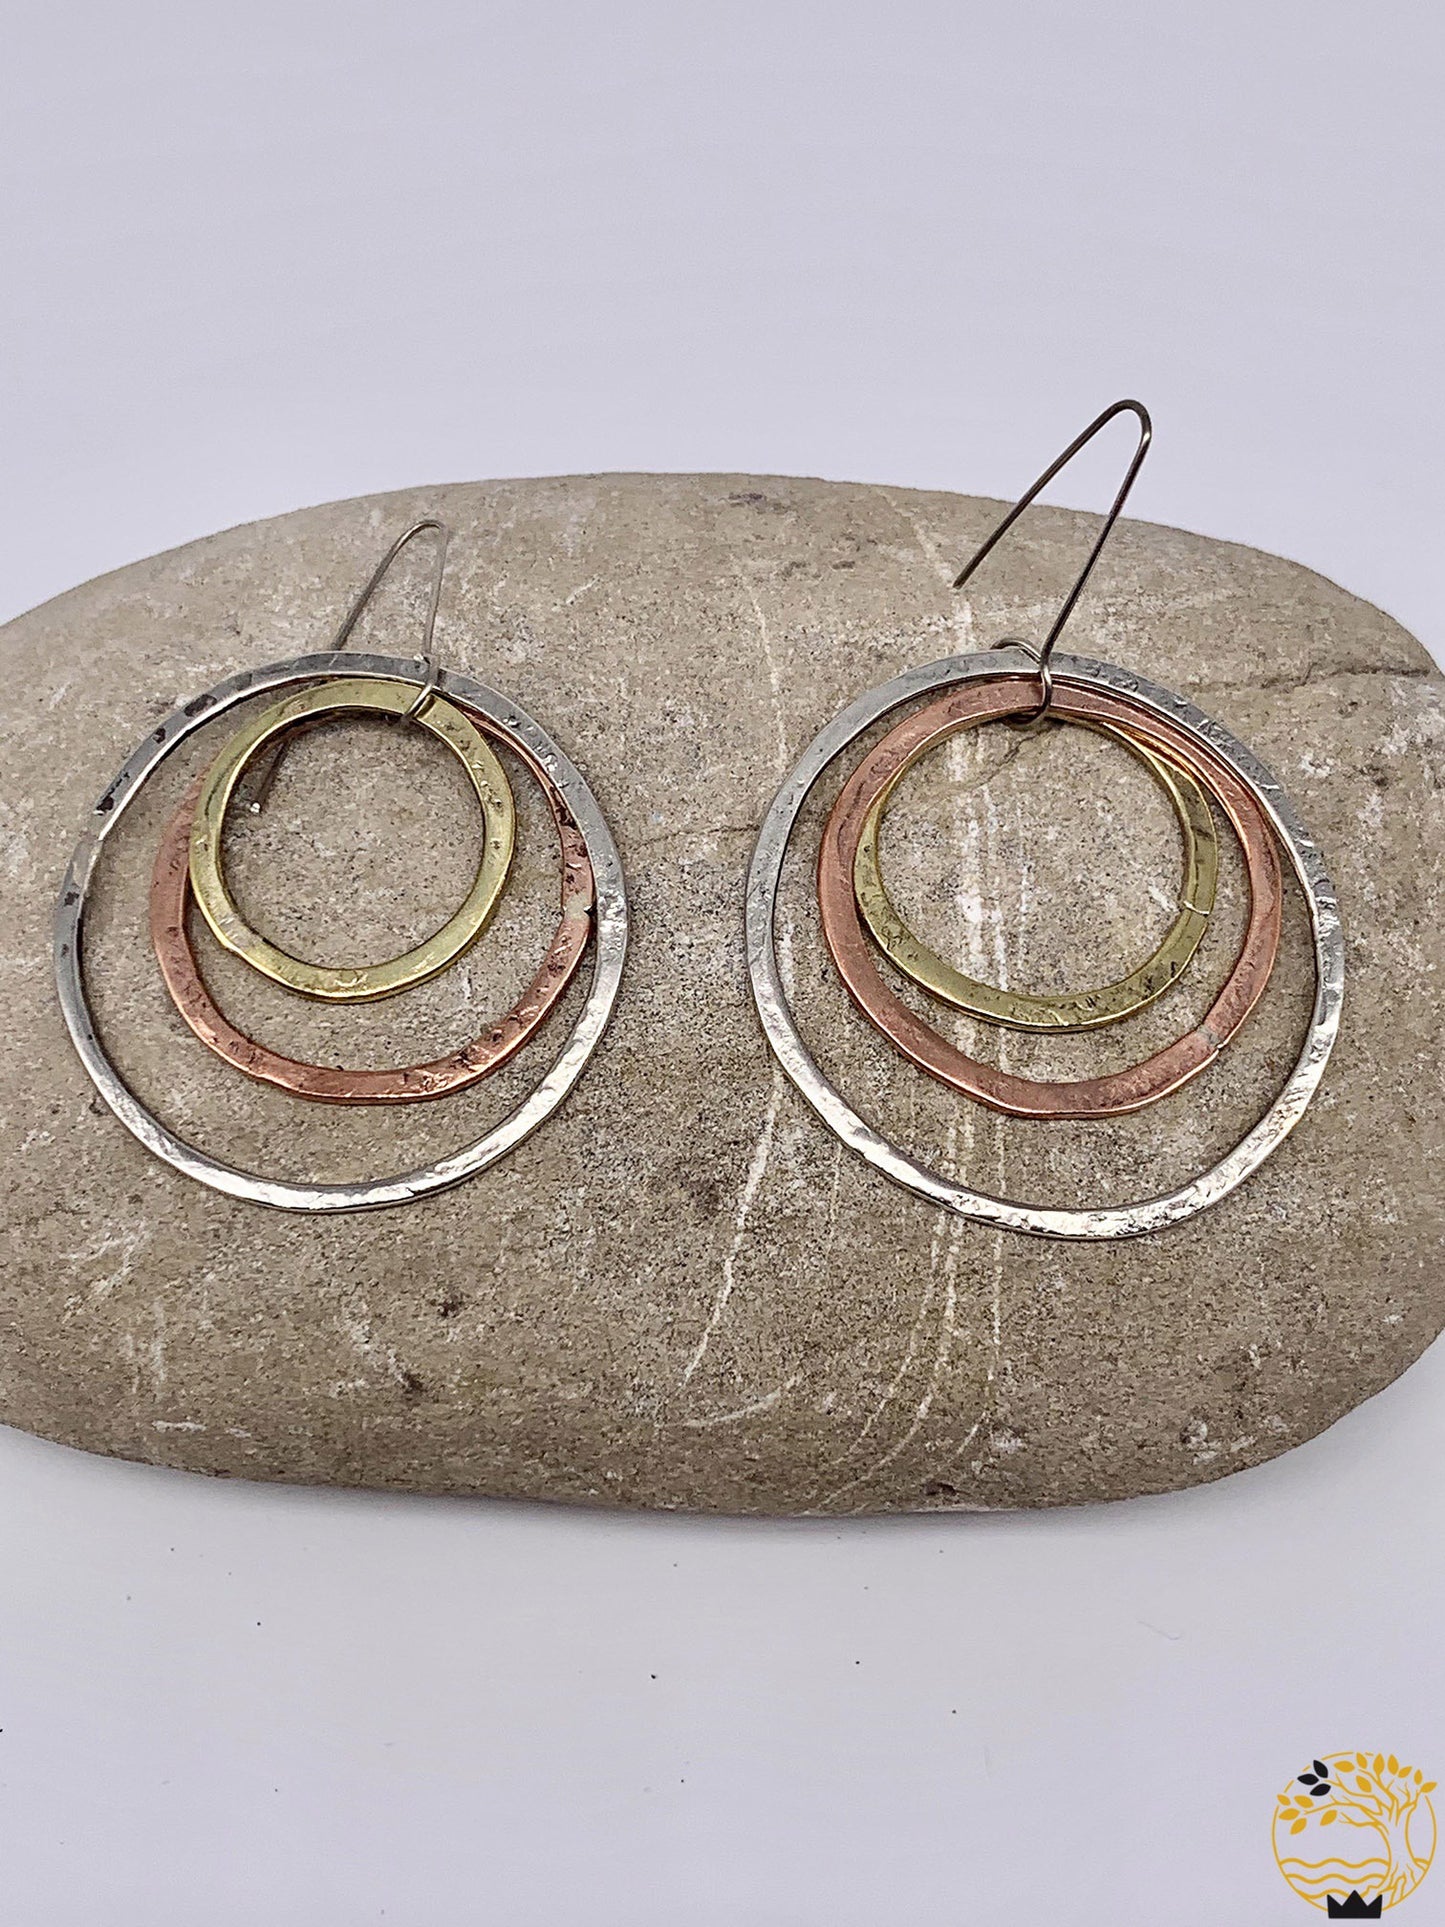 Ohrringe mit mehreren Kreisen in verschiedenen metallen